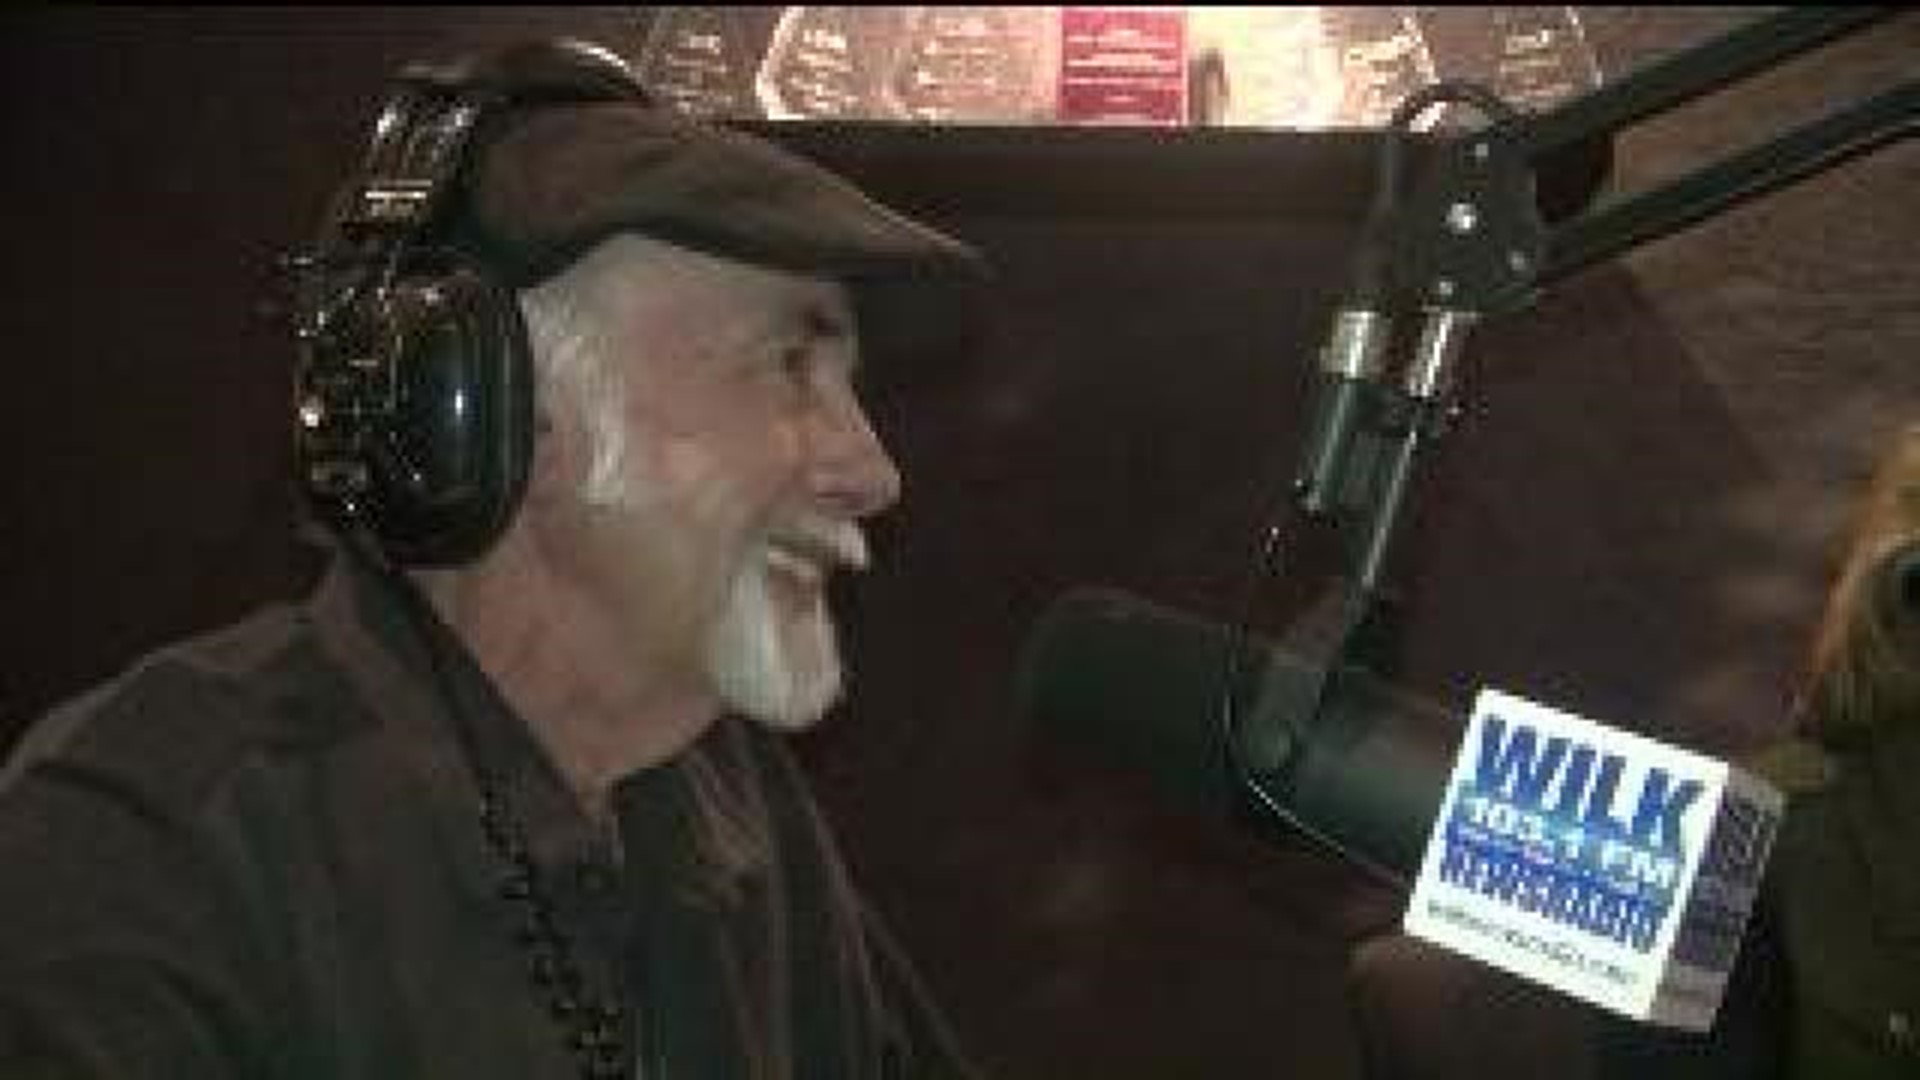 WILK’s Bud Brown Retires After 40 Years In Radio